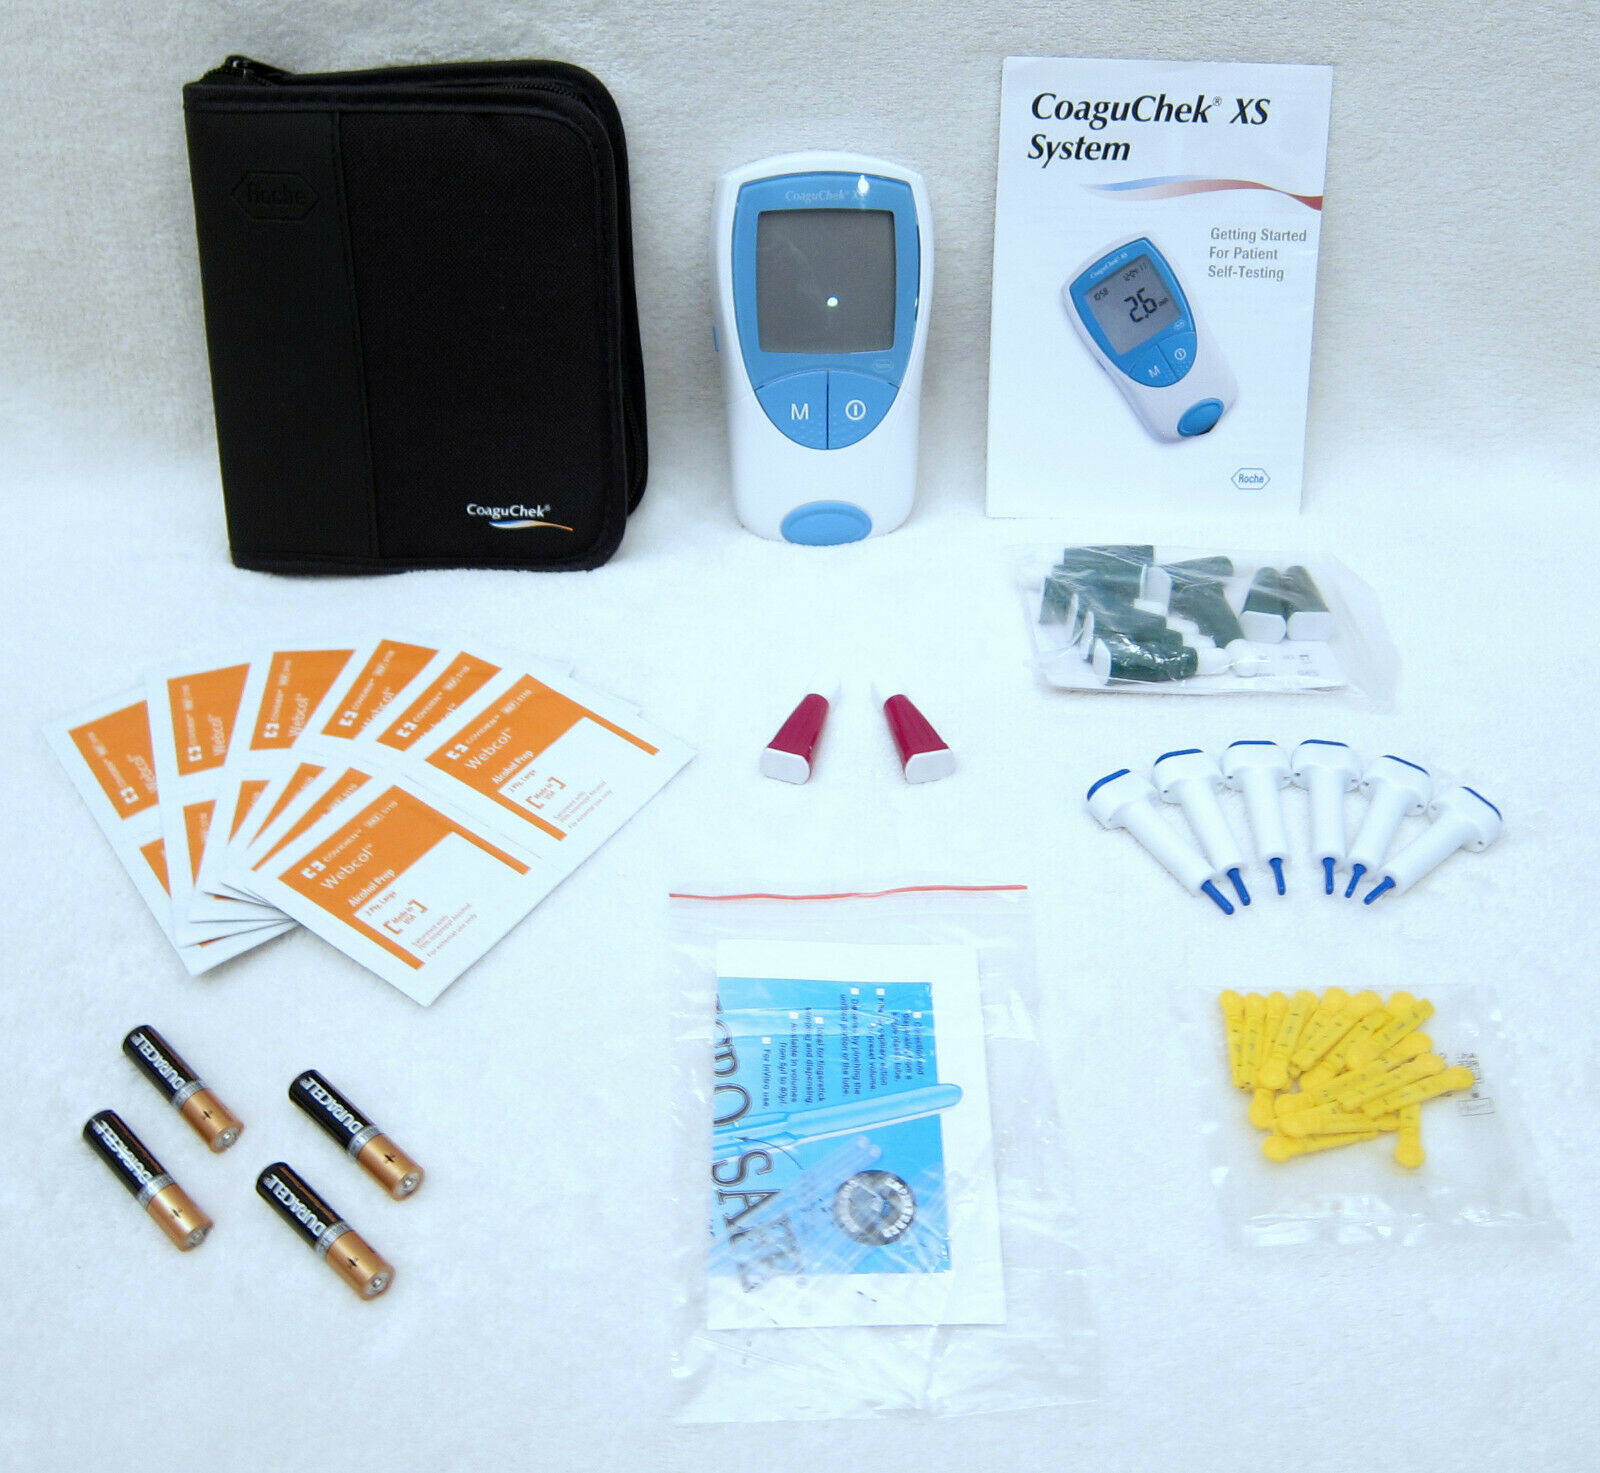 Roche Coaguchek Xs Pt/inr Meter Monitor Testing Kit + Carrying Case Lancets, Etc